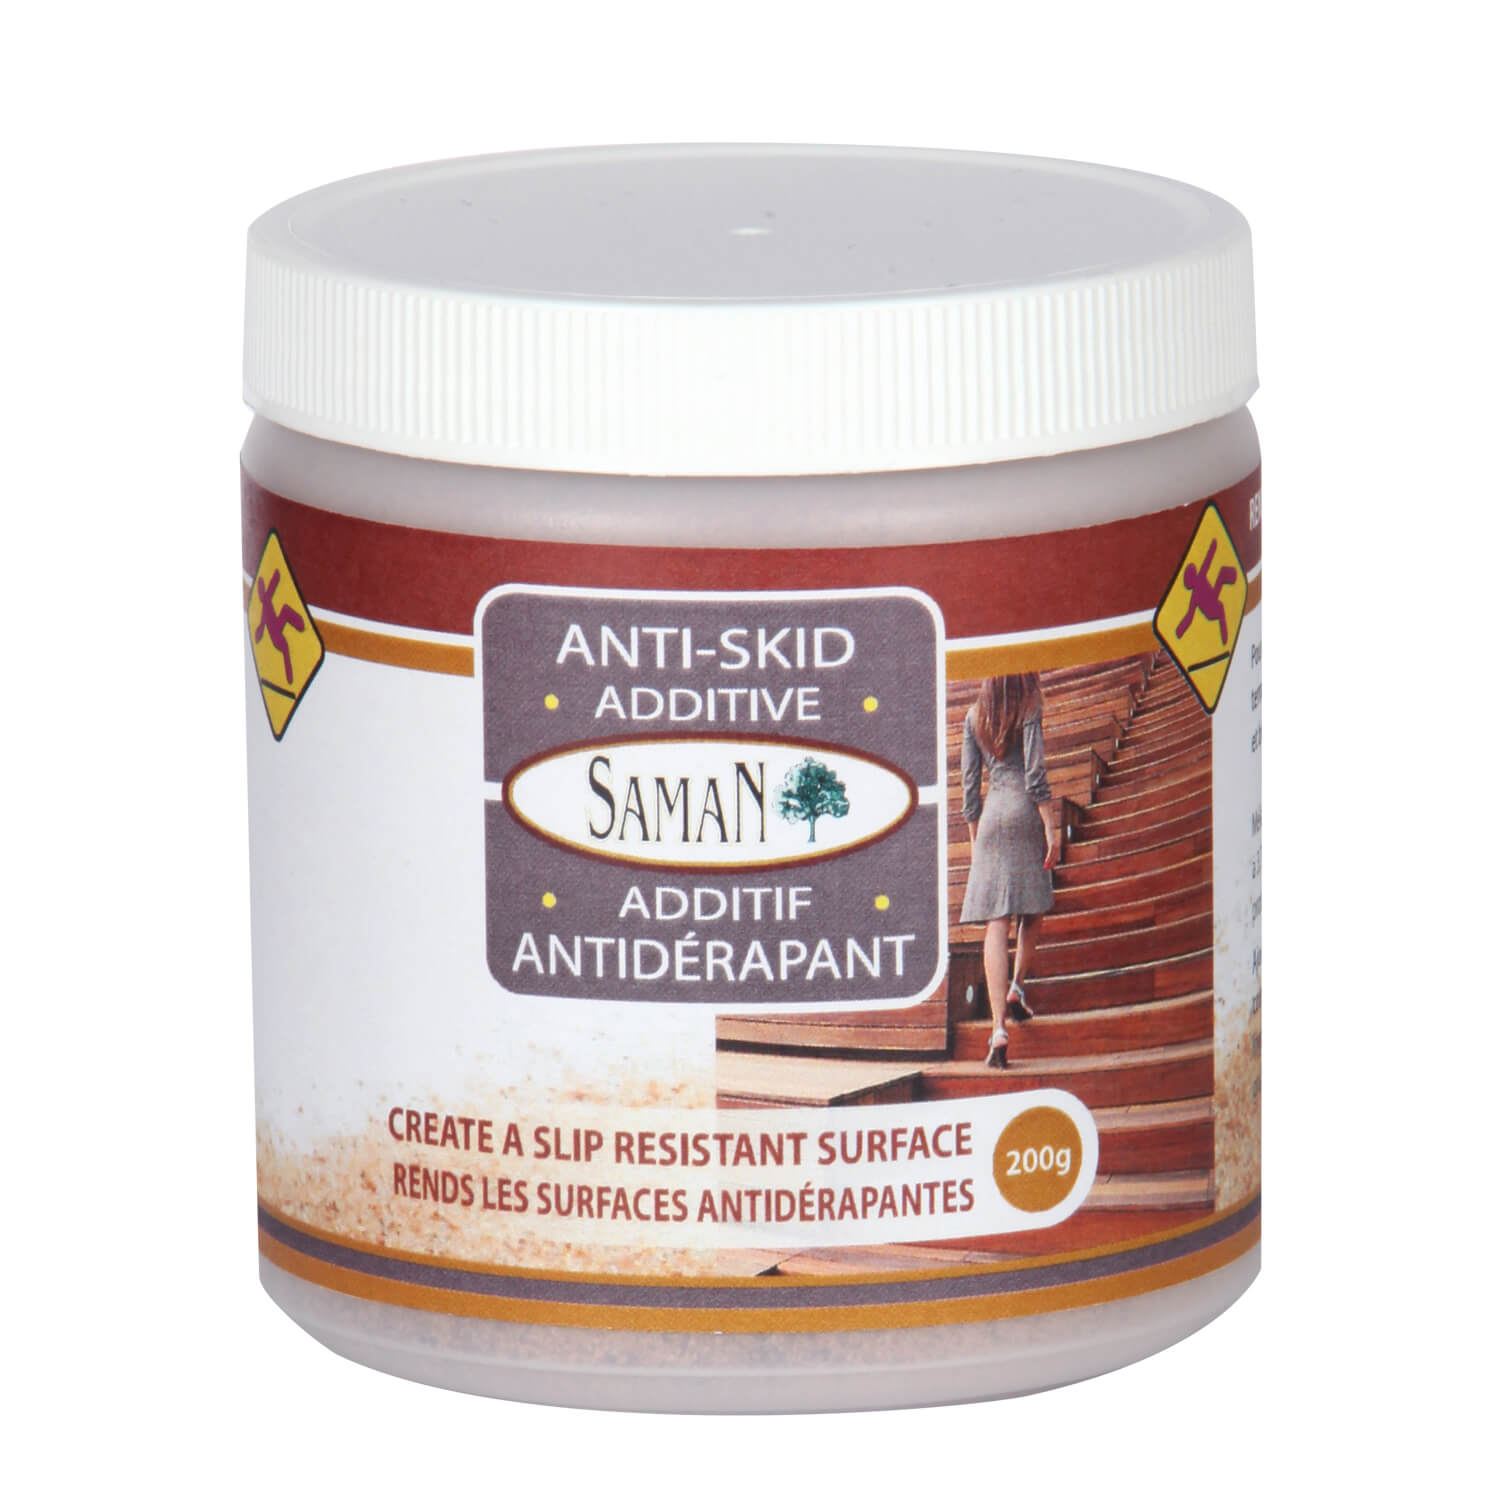 Anti-skid additive SamaN